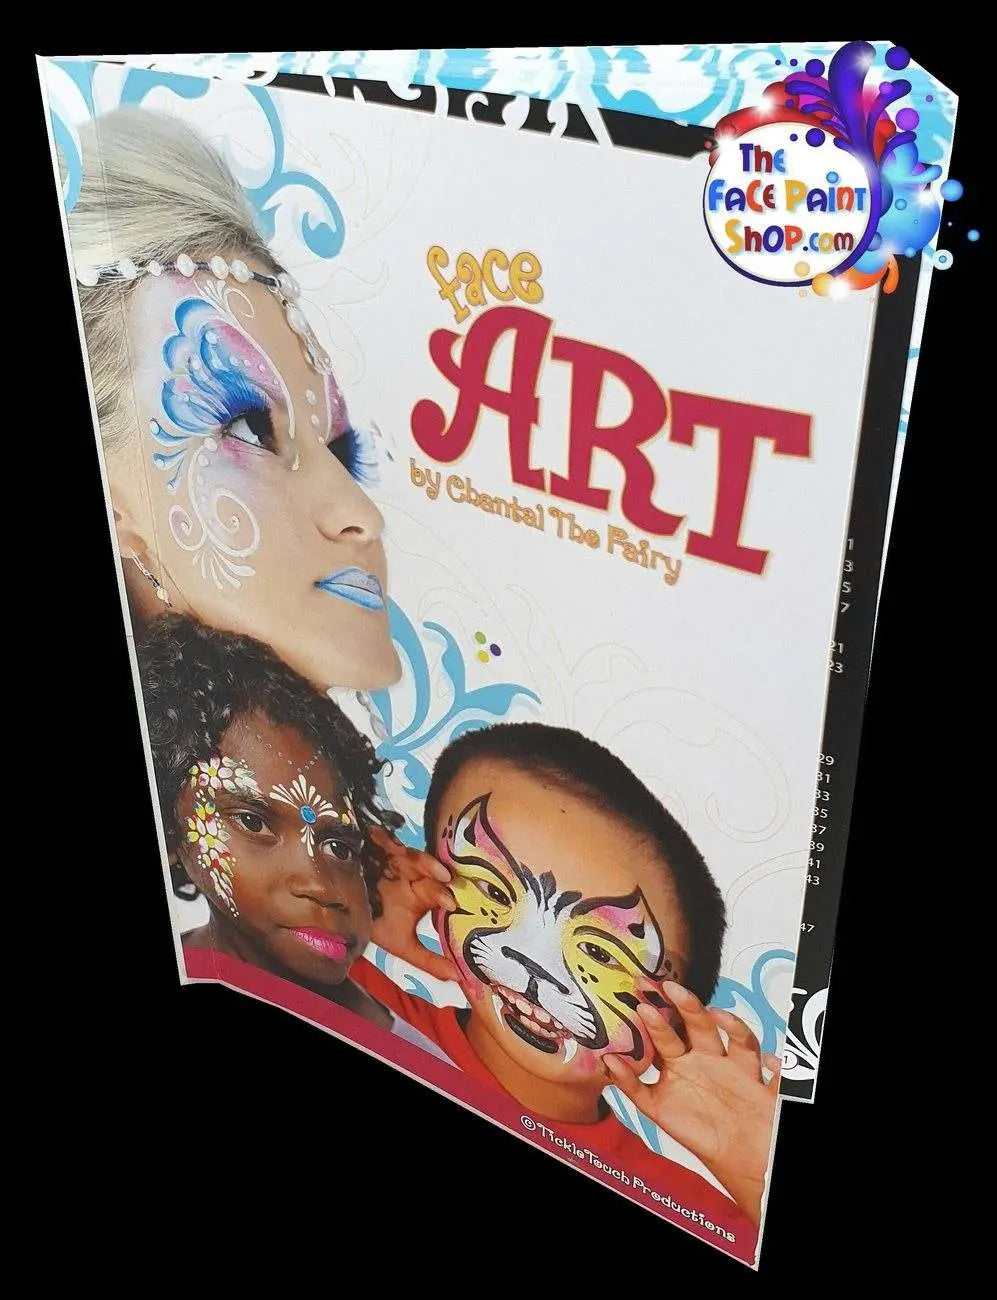 Book of Face Art by Chantal Fairy - Beginners Face Painting The Face Paint Shop Books The Face Paint Shop Australia buy face paints near me